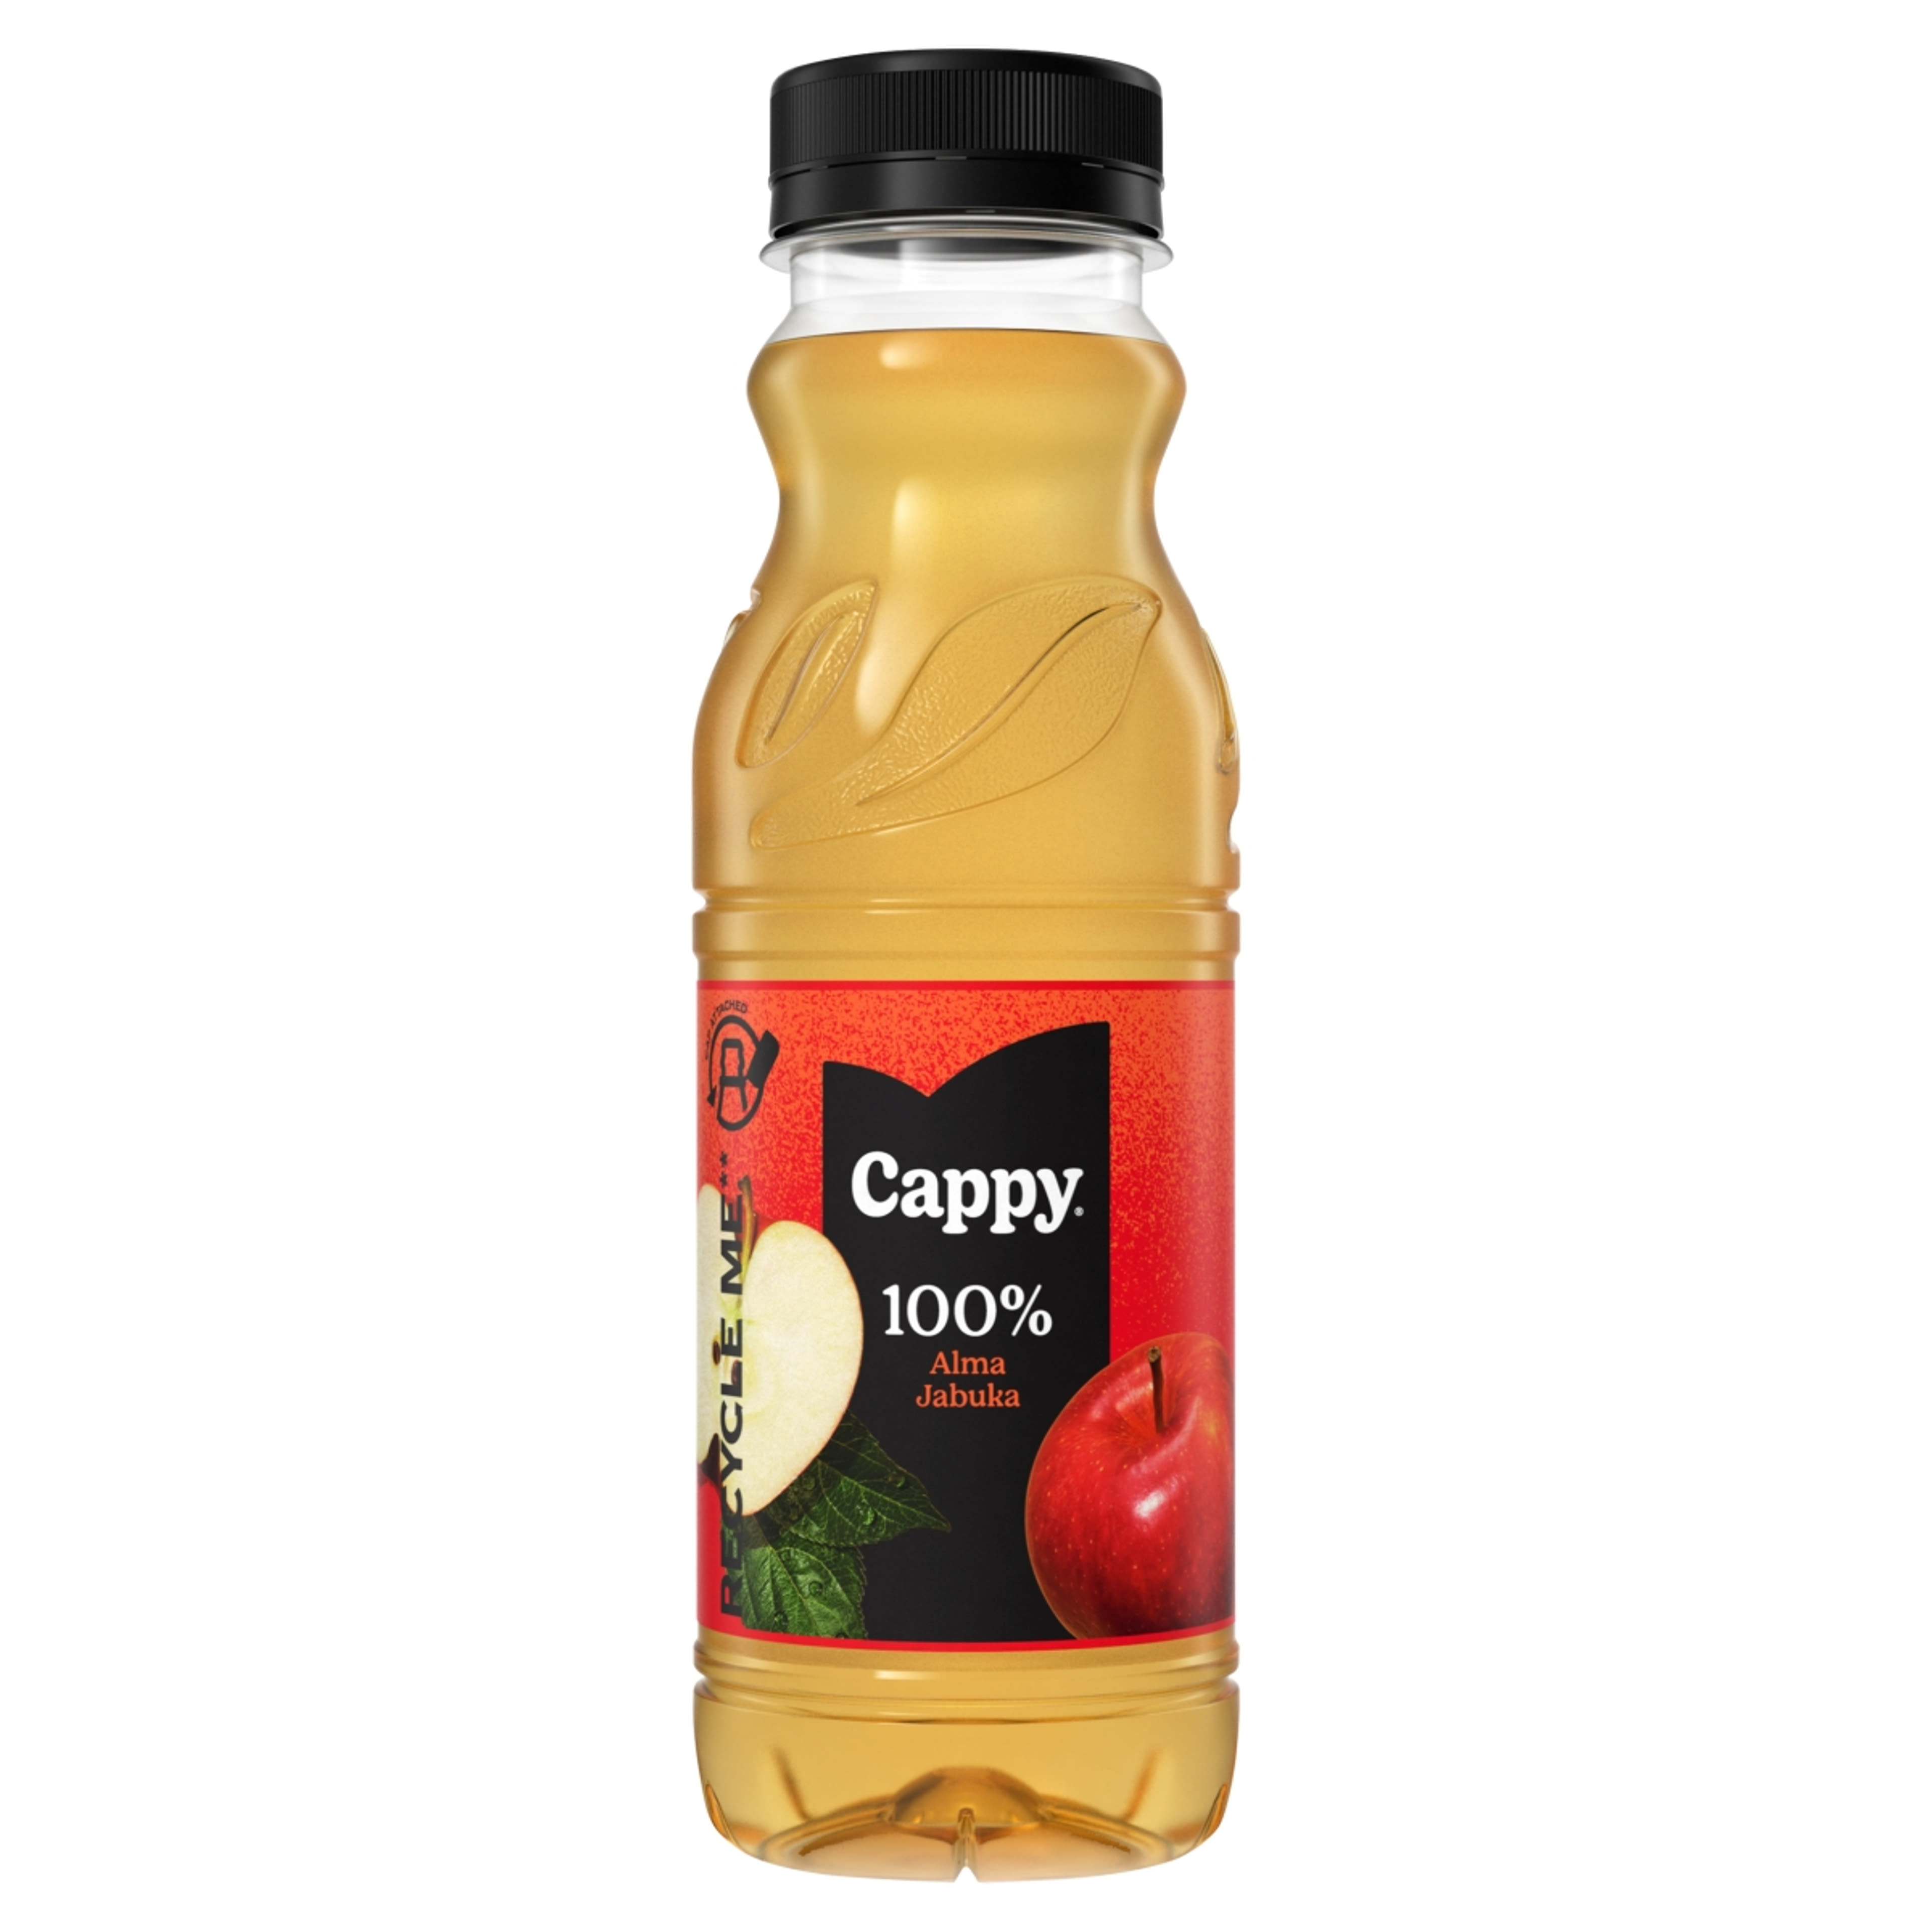 Cappy alma - 330 ml